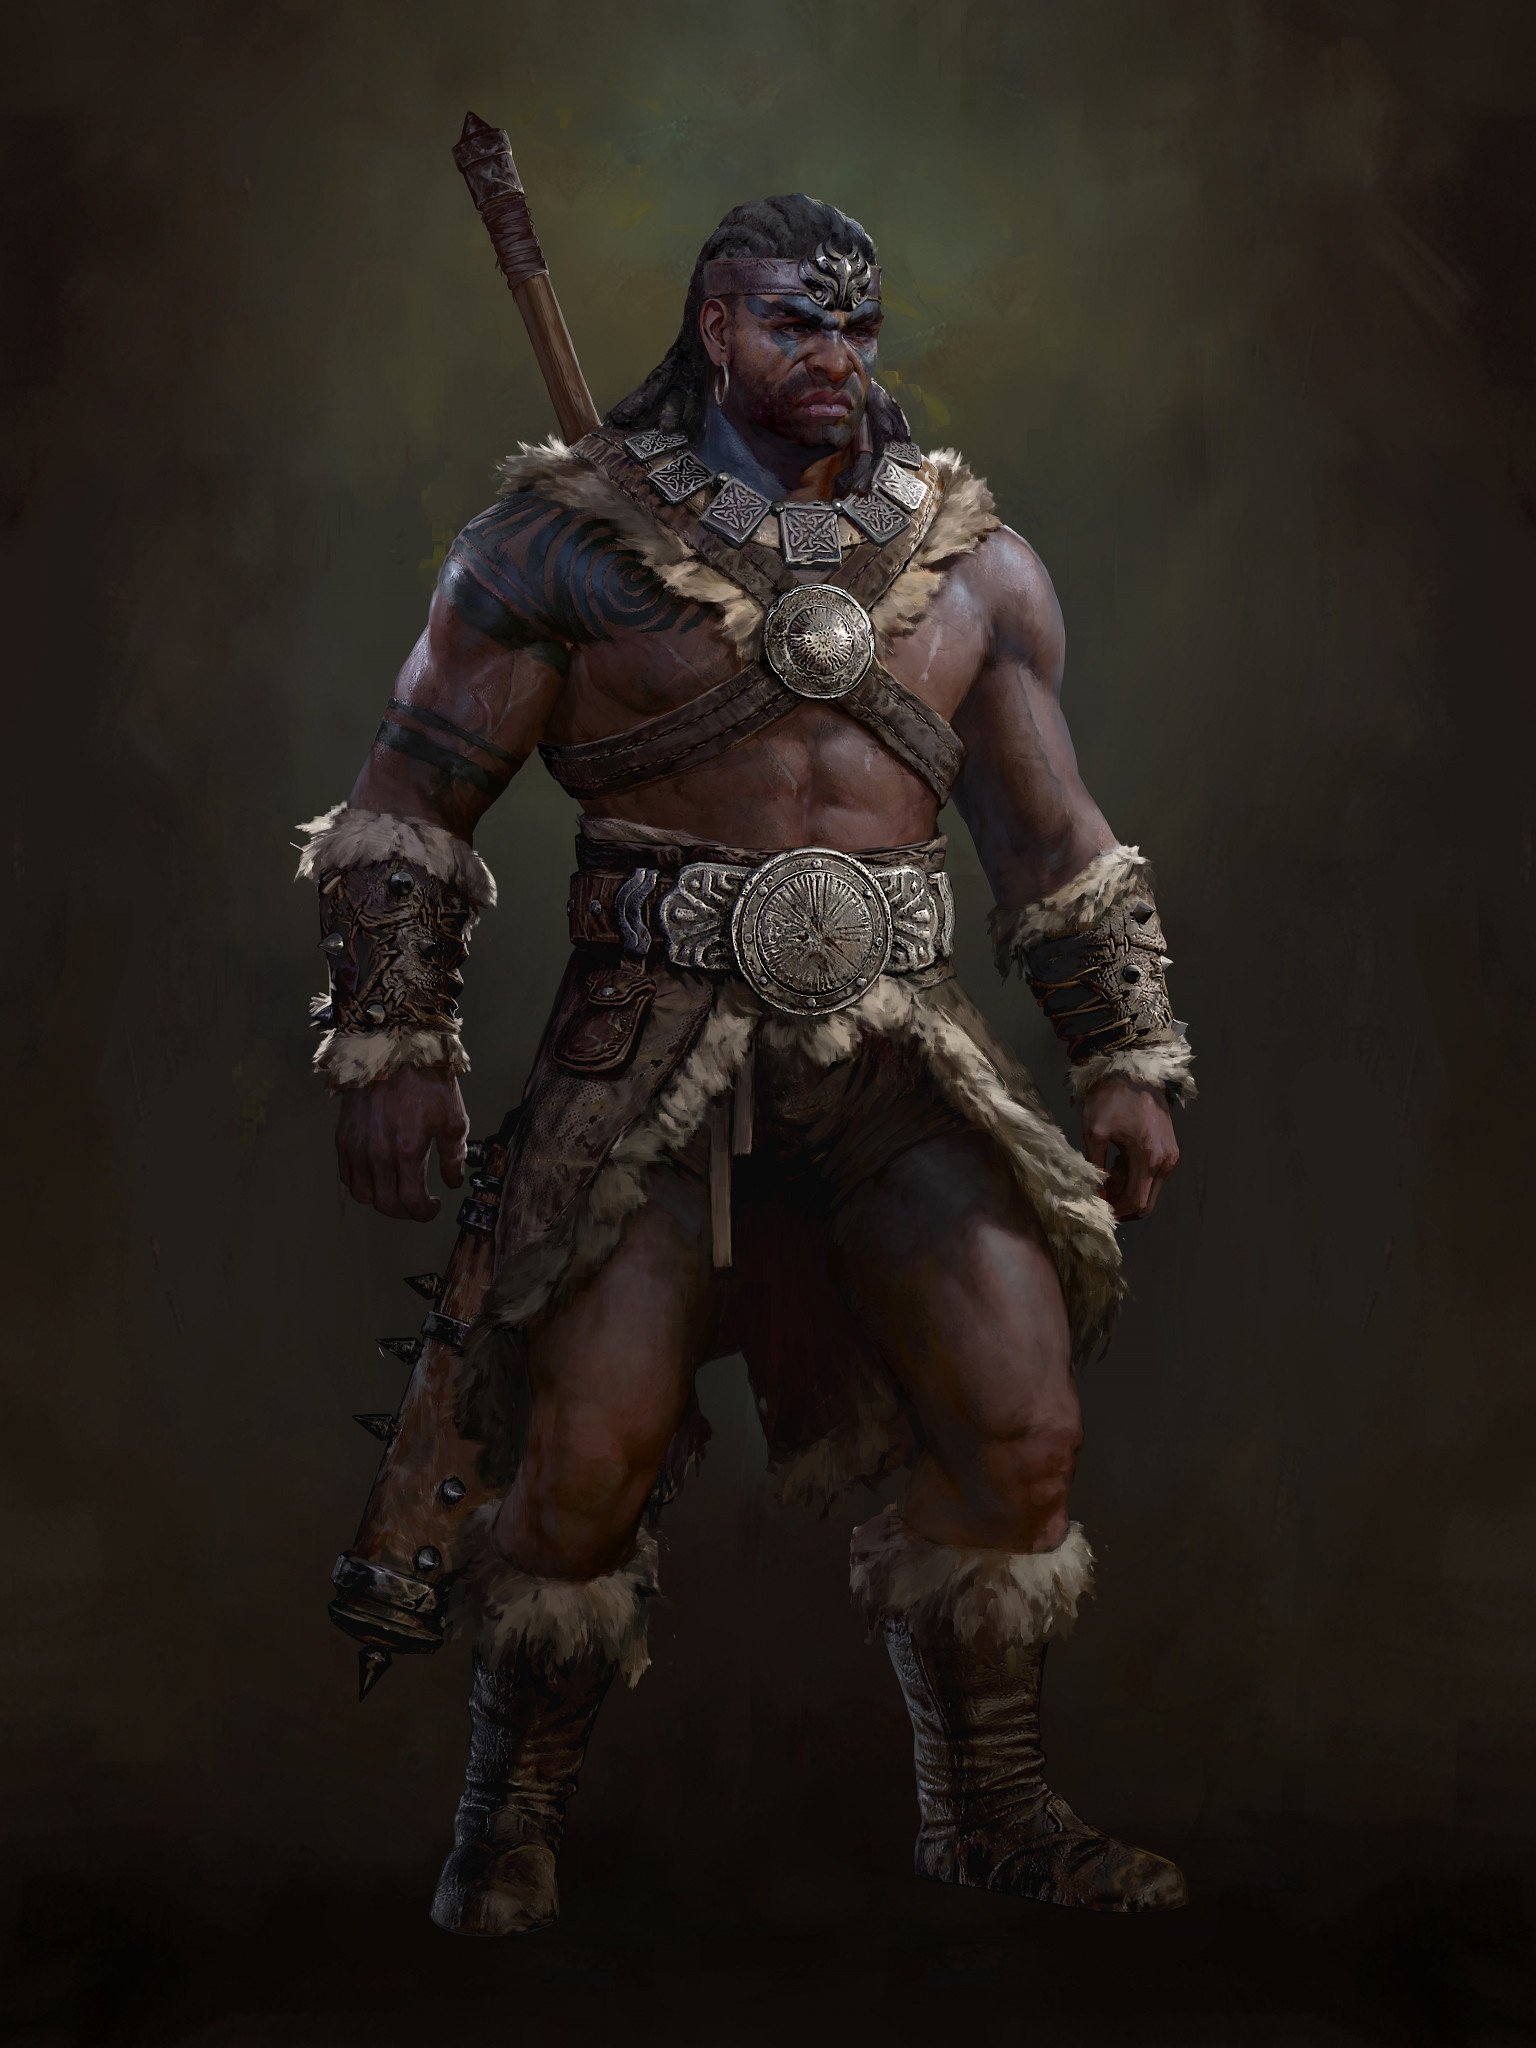 Concept art of the Barbarian in Diablo 4